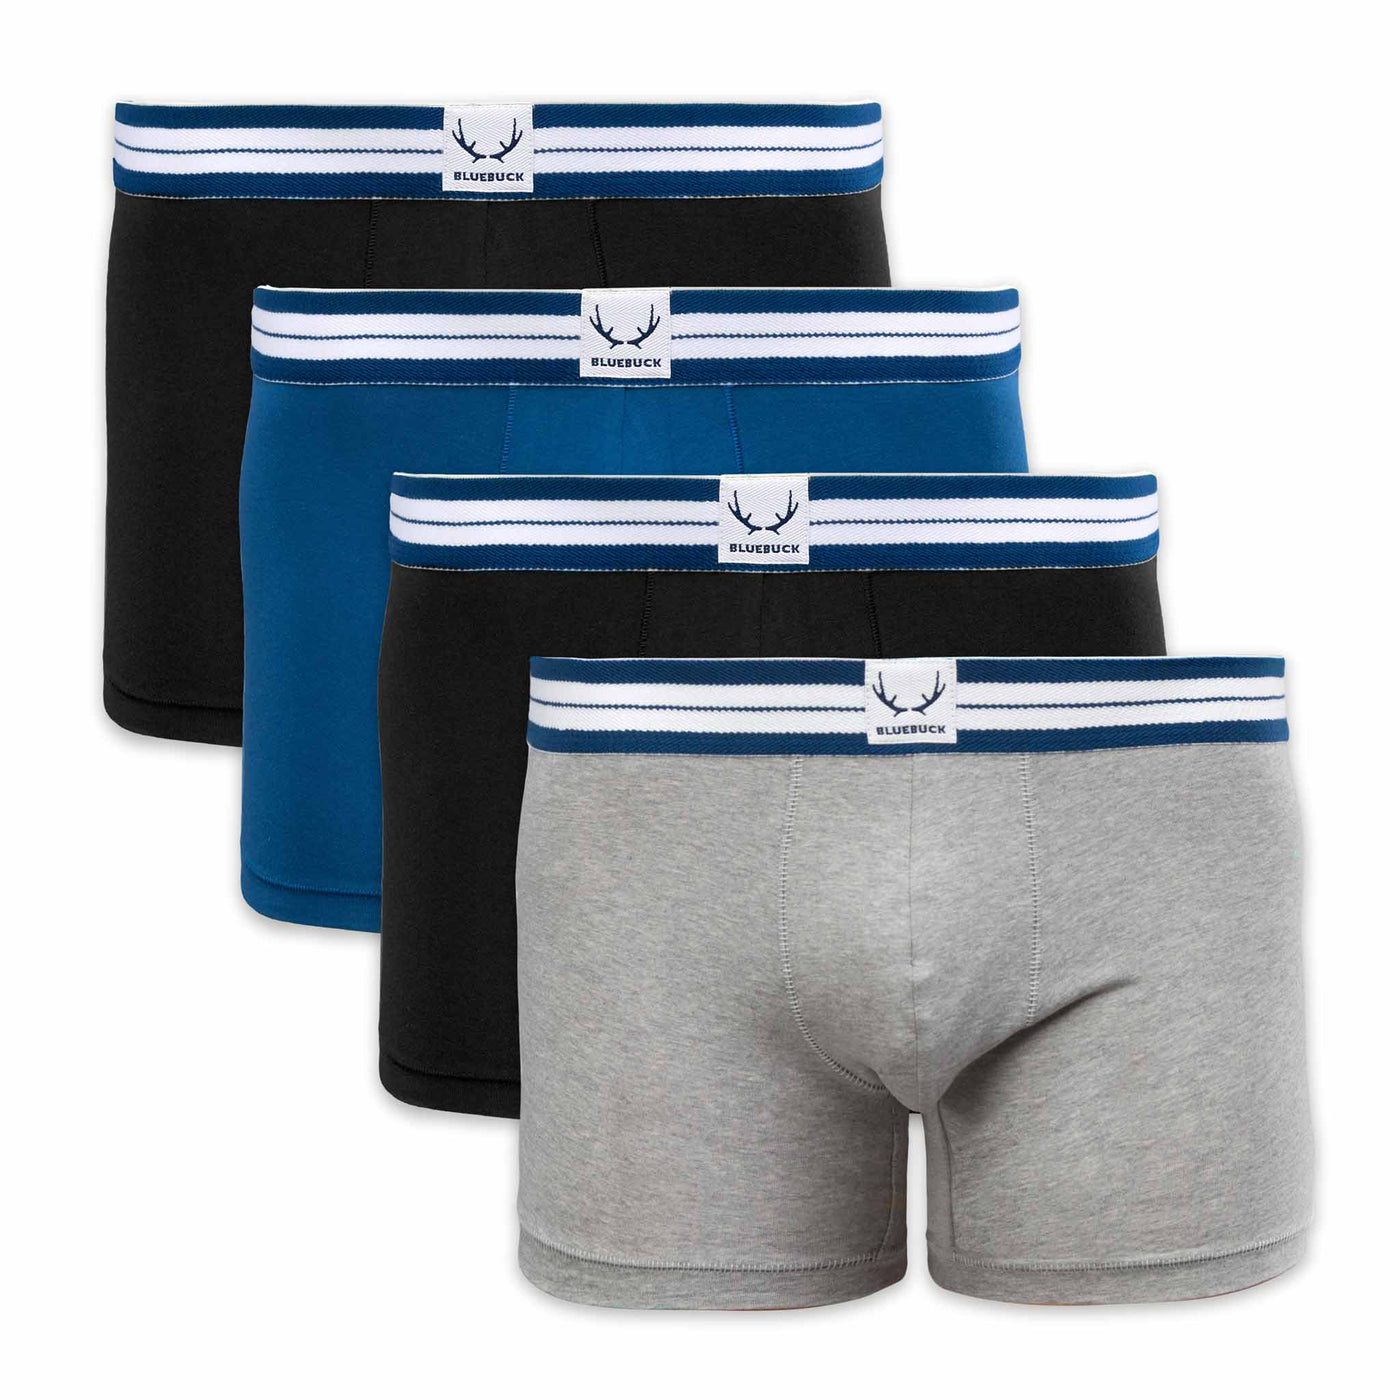 4 organic cotton boxer briefs - black, grey, blue for men